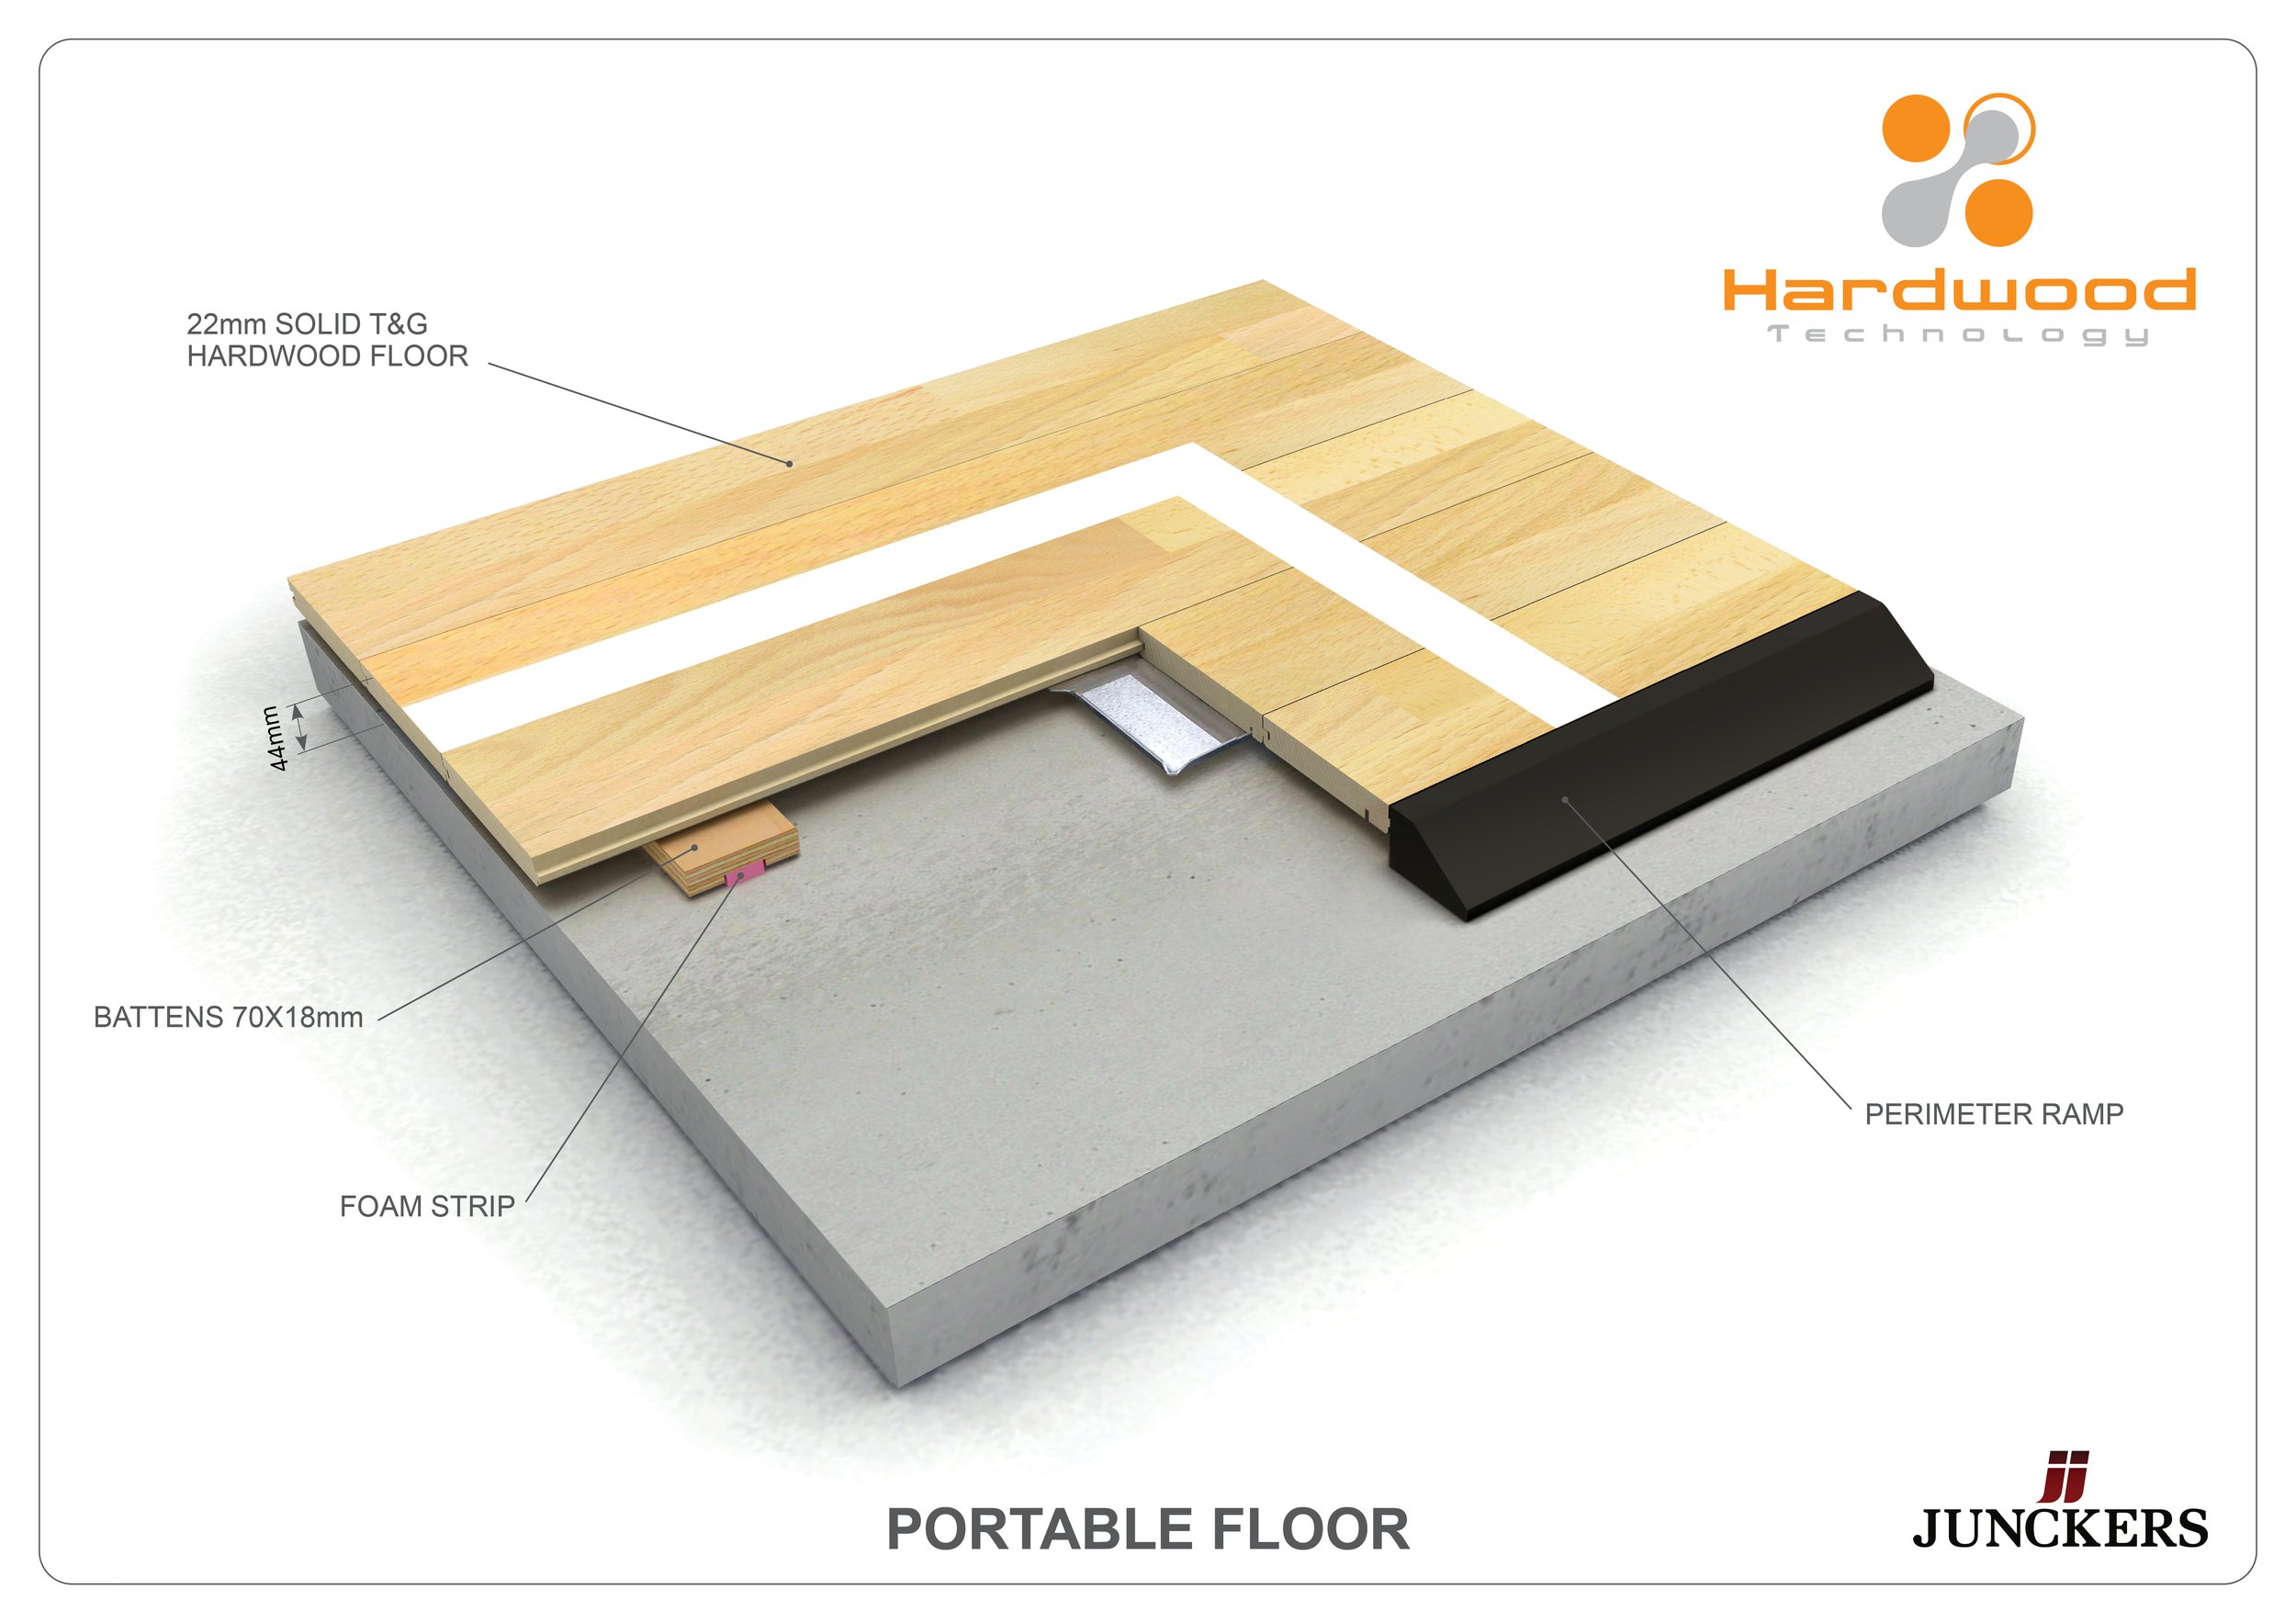 Hardwood Floors_Portable floor.jpg